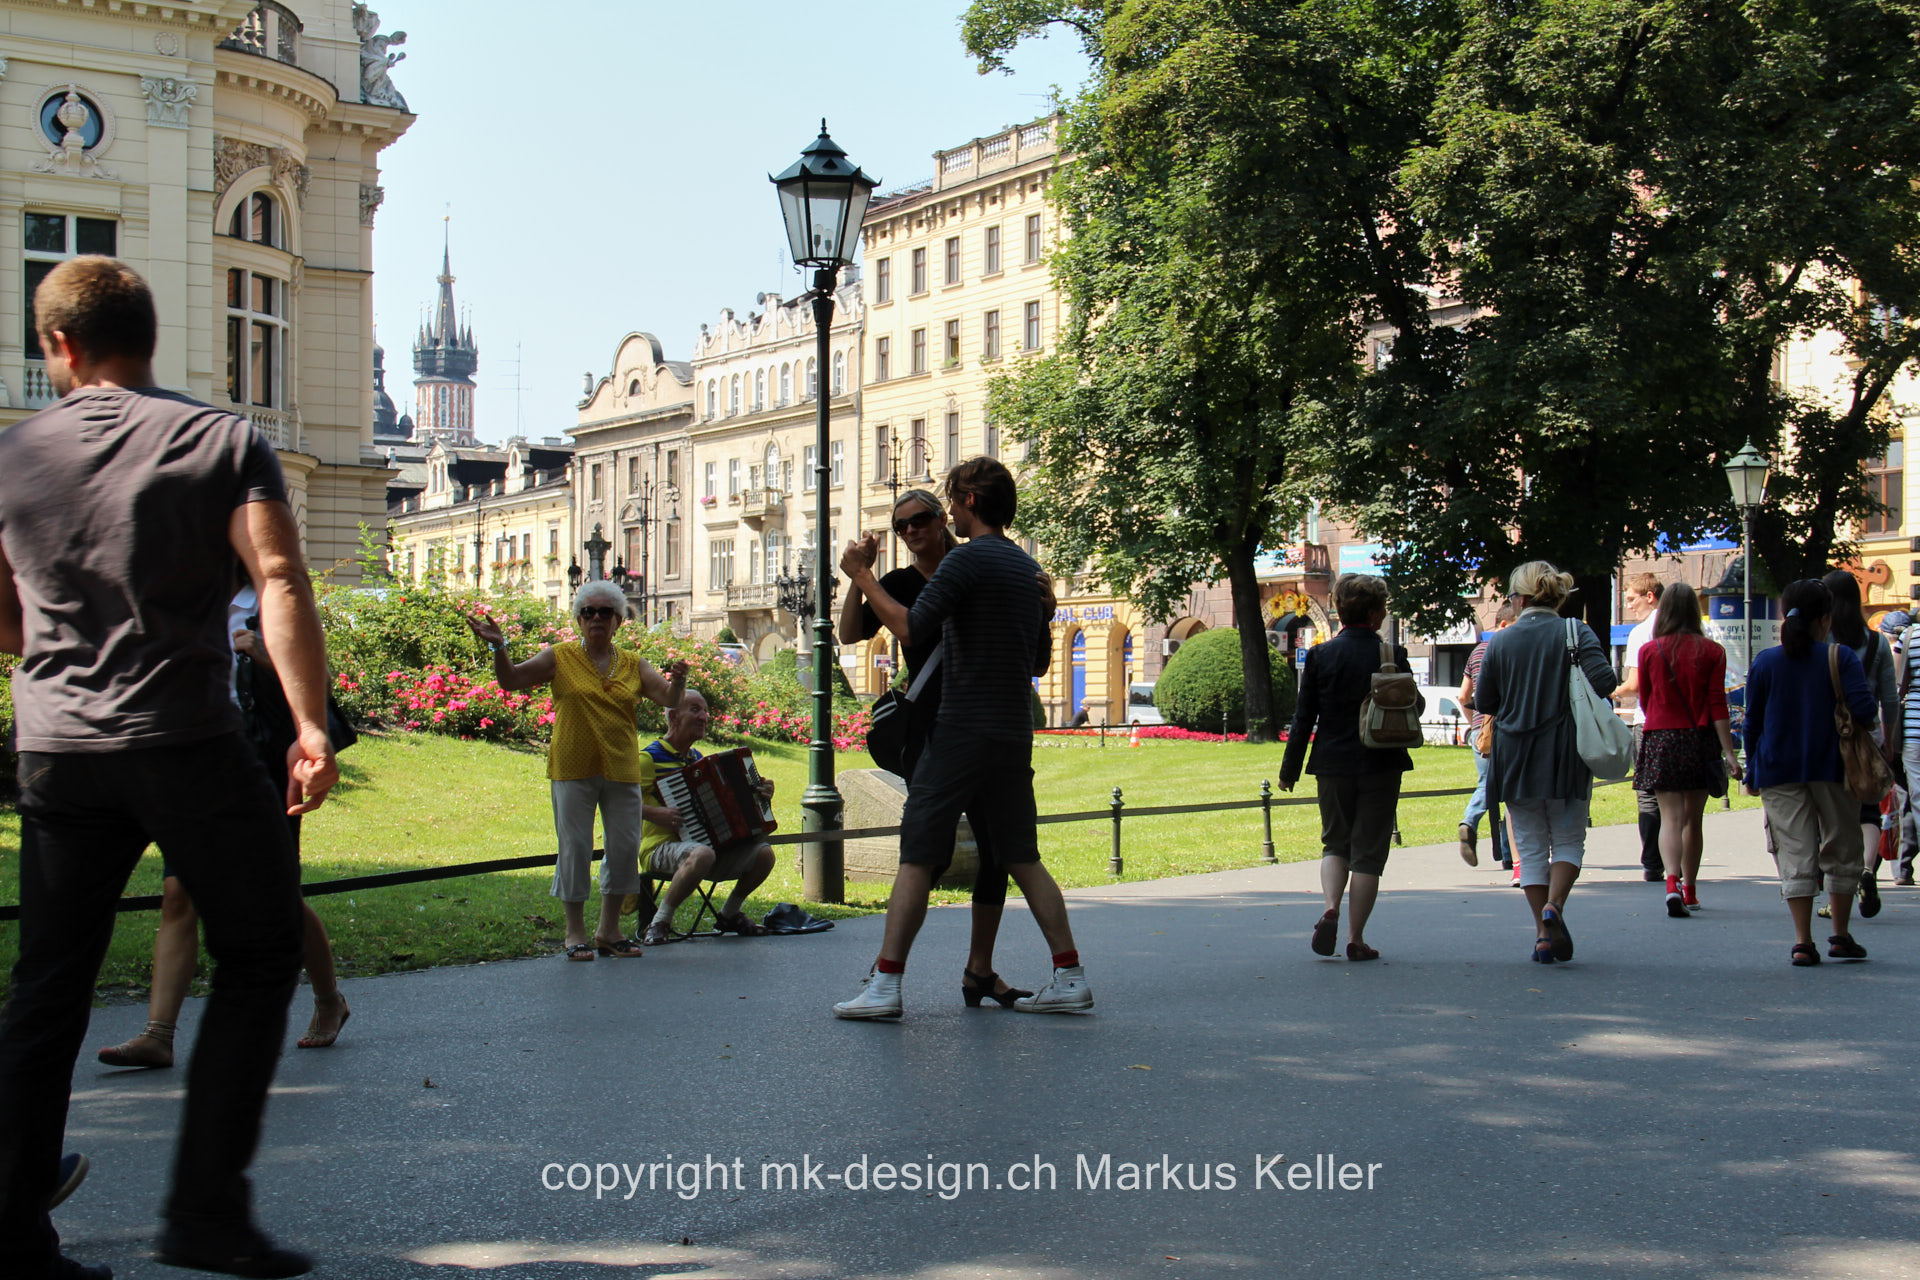 Mensch   Musikant/Akteur   Bauwerk   Park/Platz/Strasse   